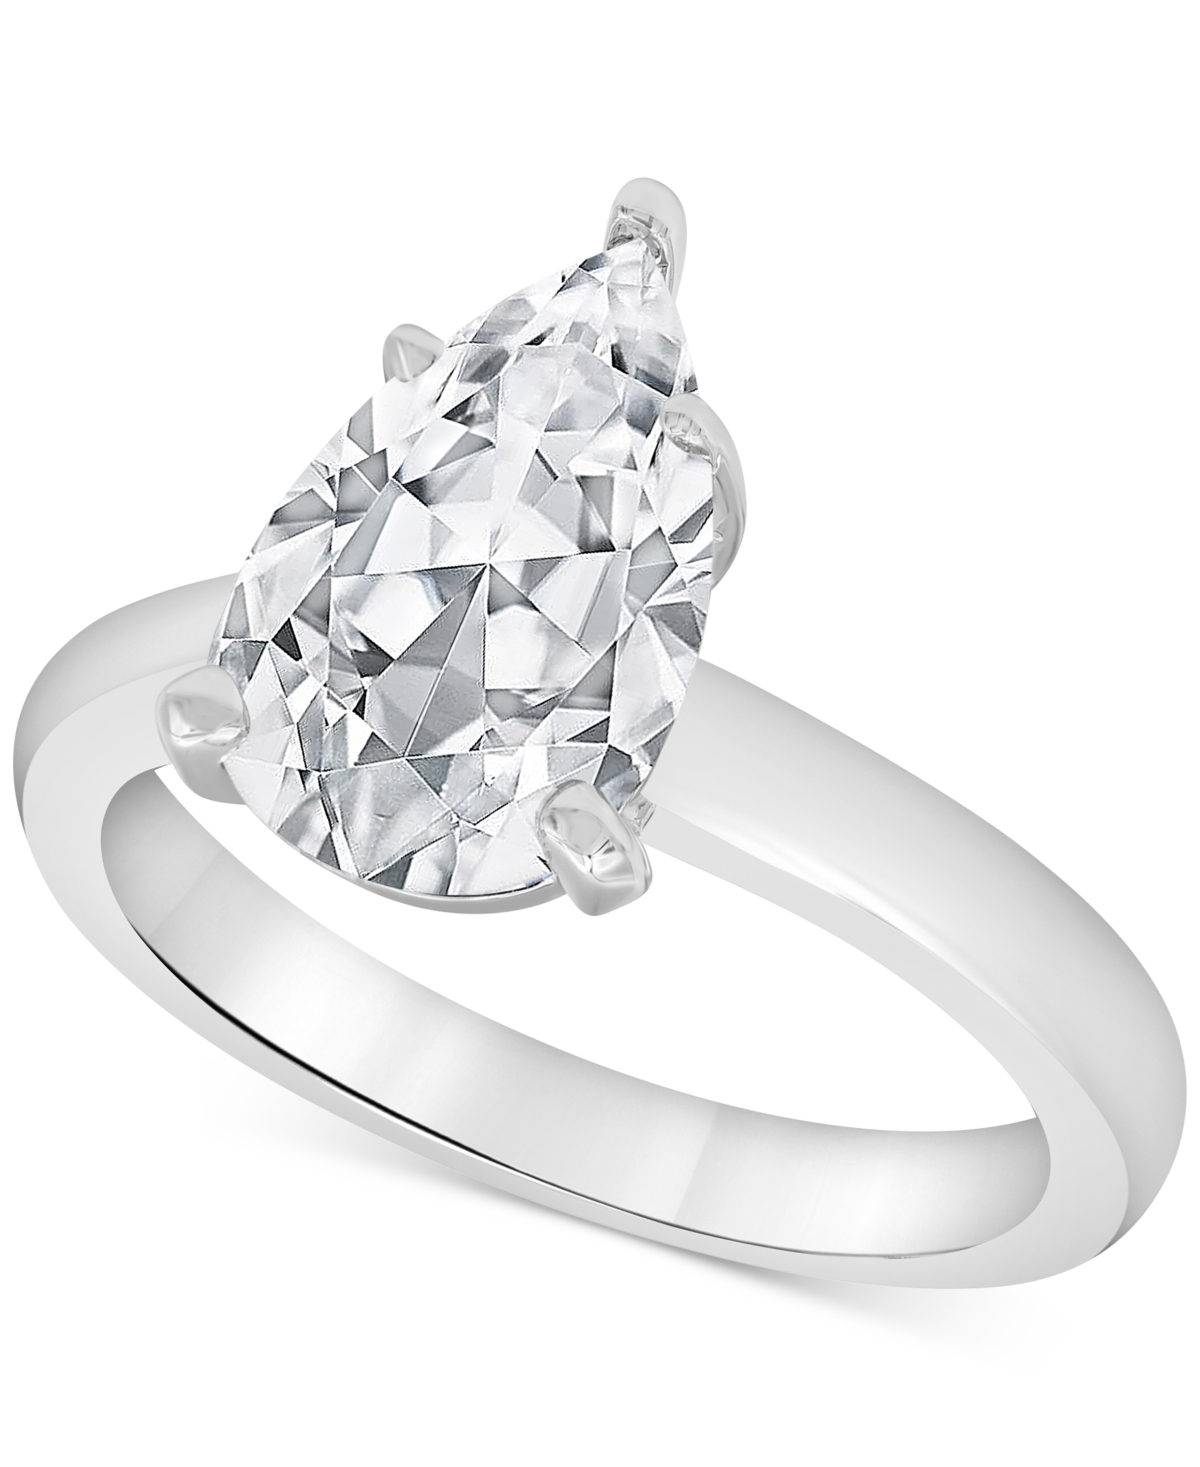 Badgley Mischka Certified Lab Grown Diamond Engagement Ring (3 ct. t.w.) in 14k White Gold